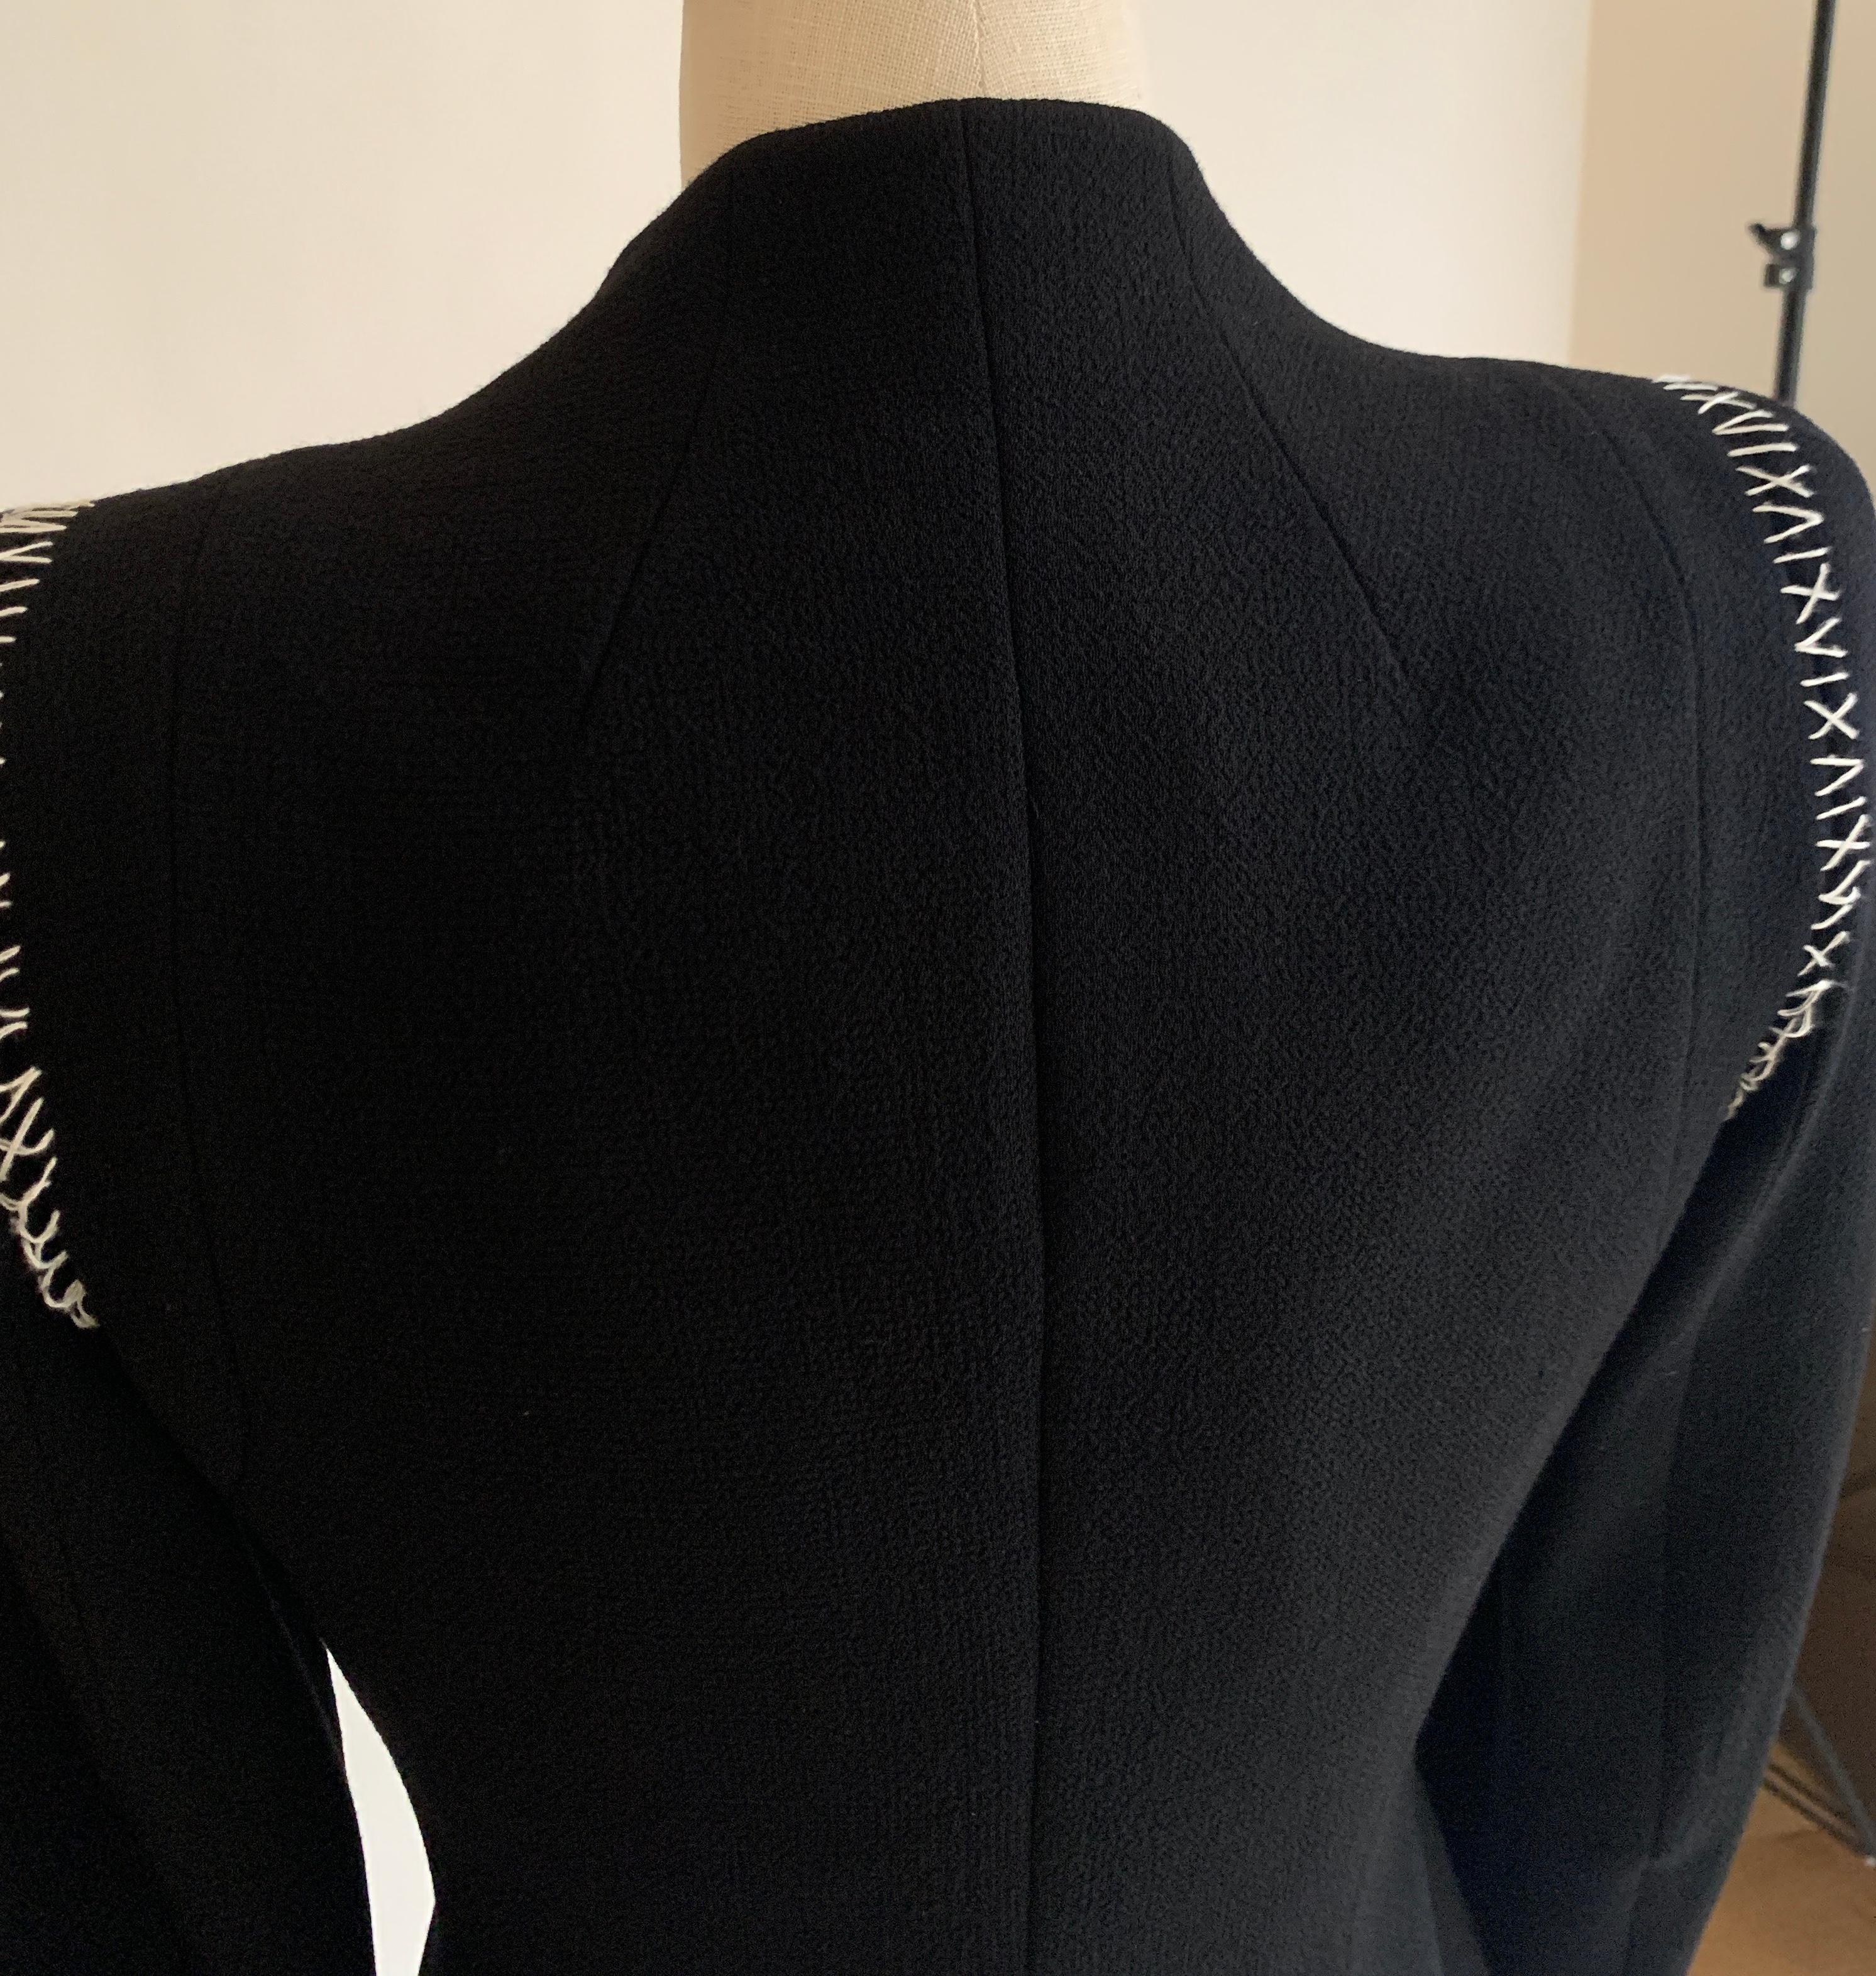 Alexander McQueen 2004 Black Tailored Jacket with White Stitch Detail 1